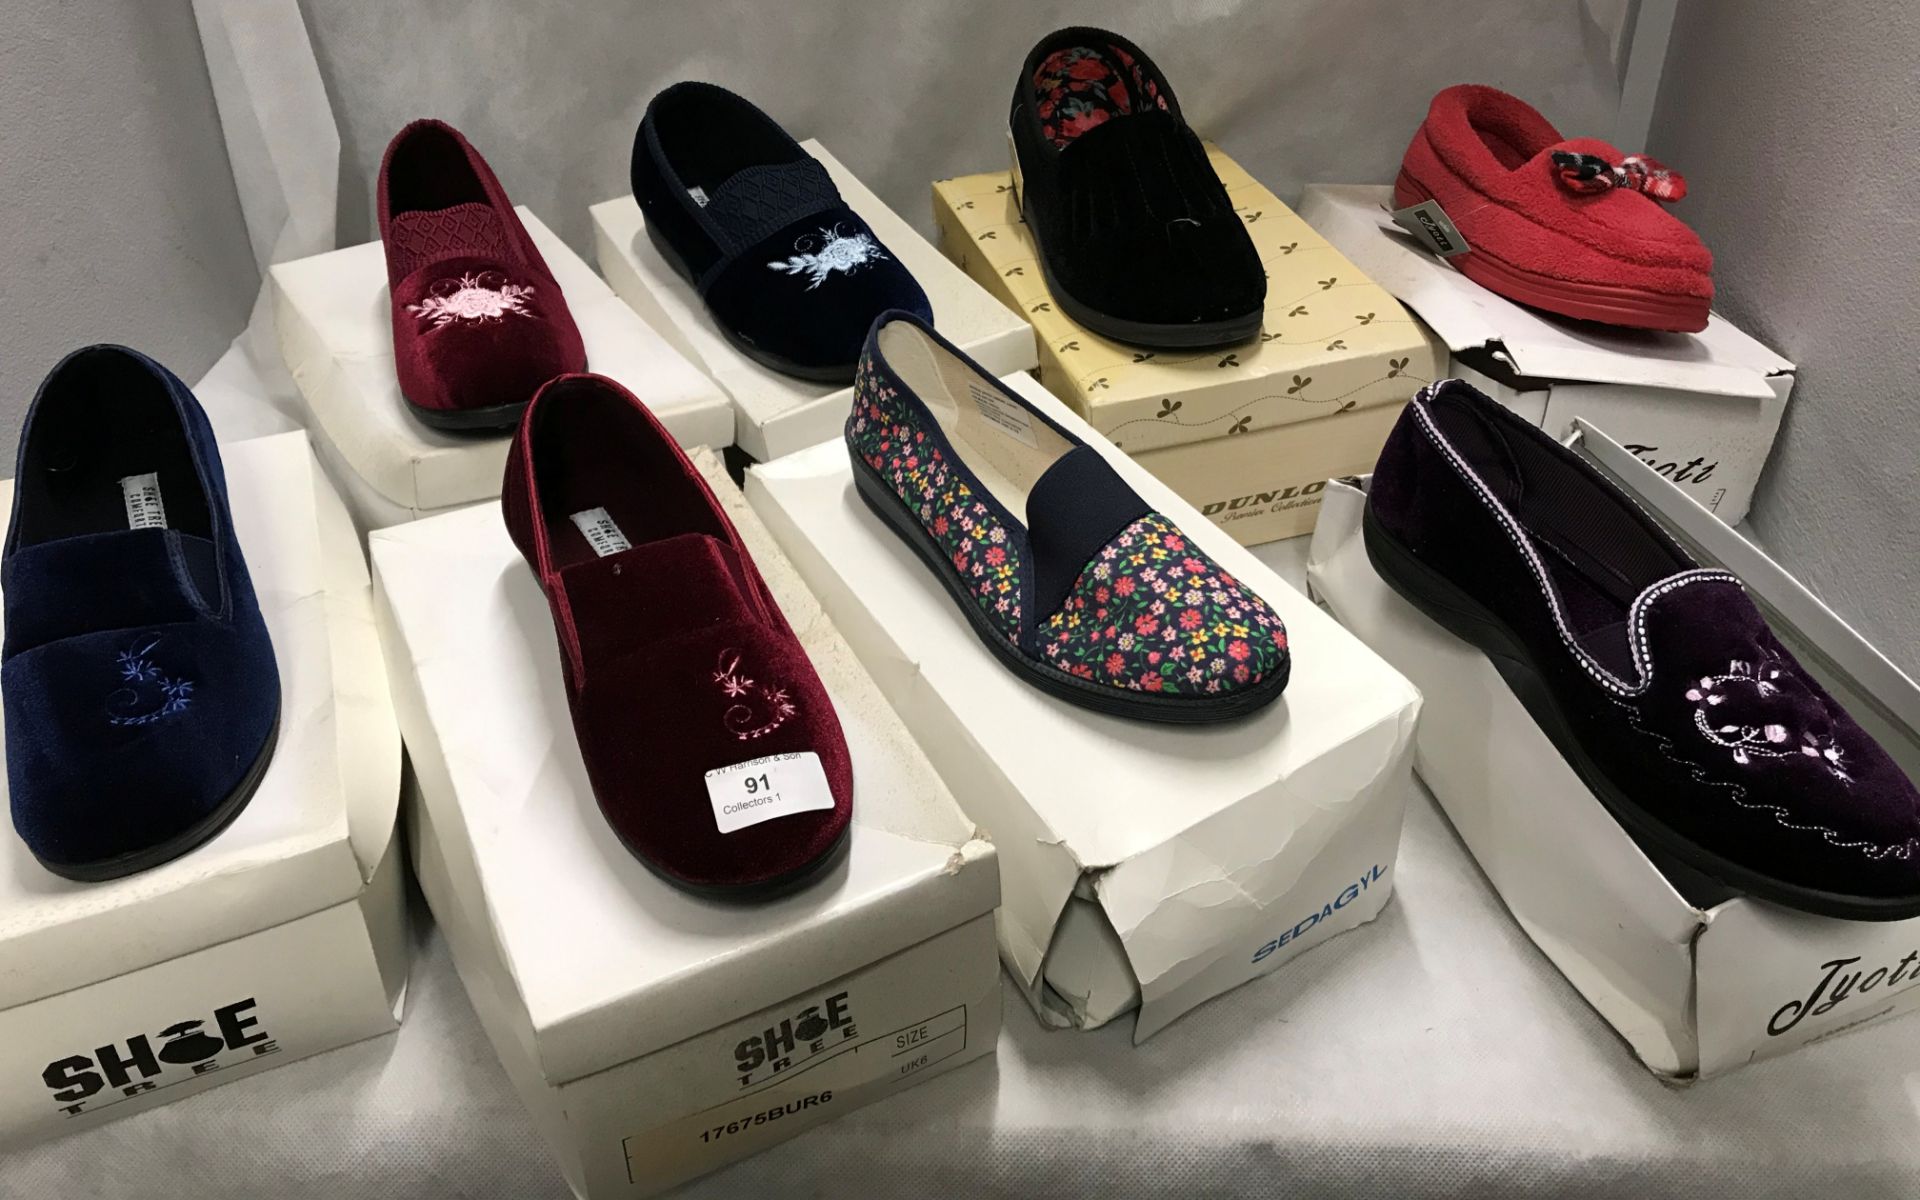 8 x pairs of ladies slippers by Dunlop, Shoe Tree, Sedagyl Tyotti,